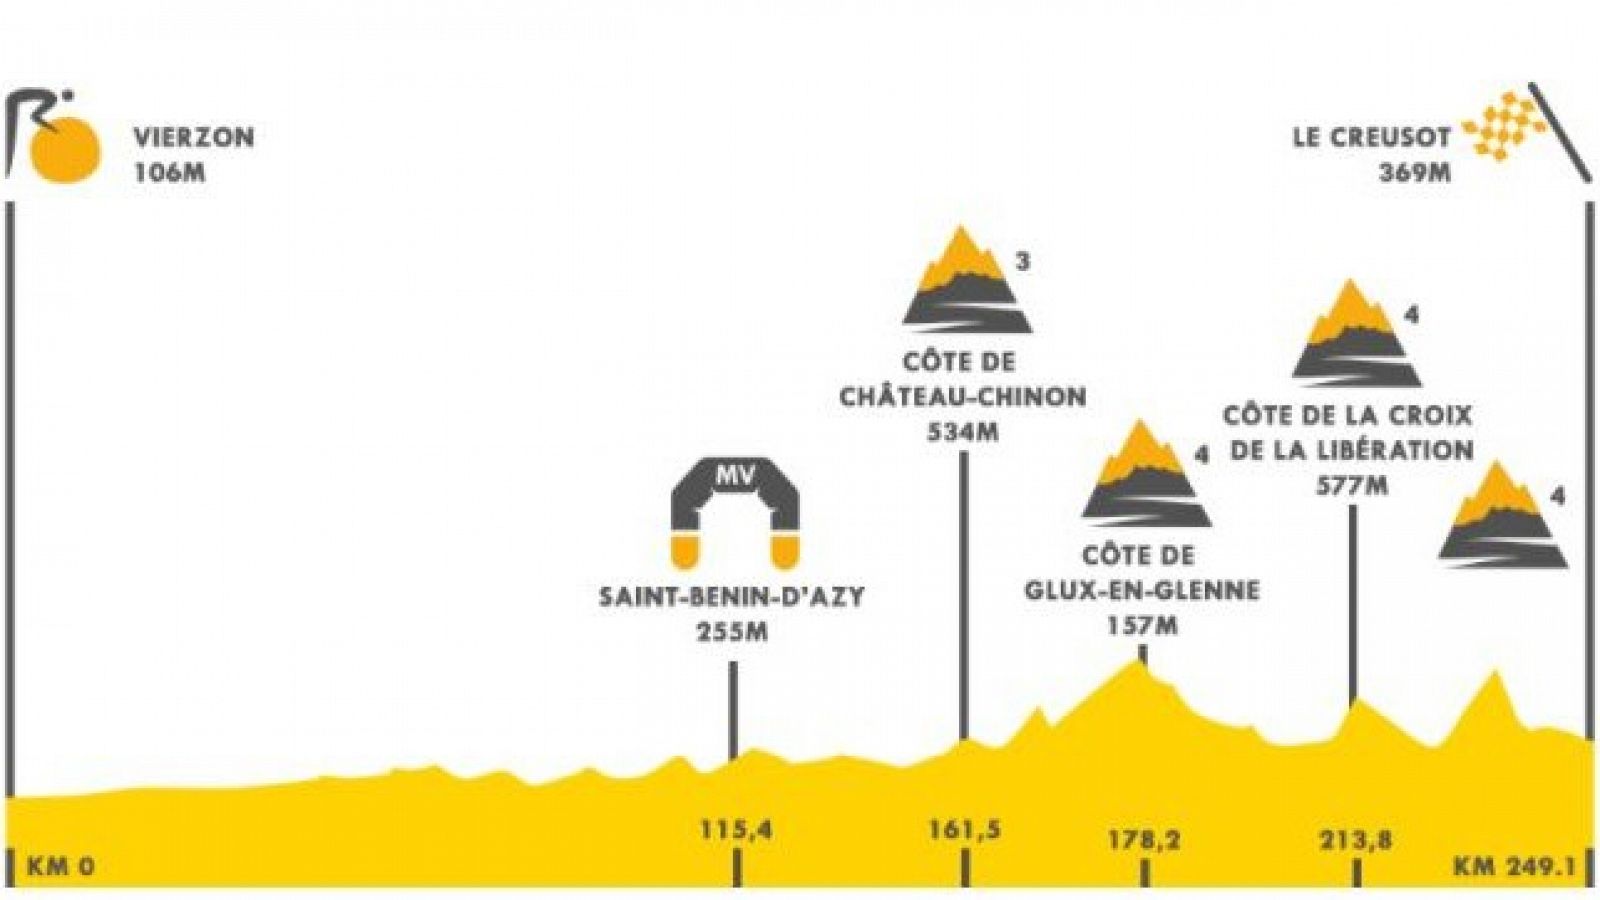 Así es el perfil de la etapa 6 del Tour de Francia entre Vierzon y Le Creusot